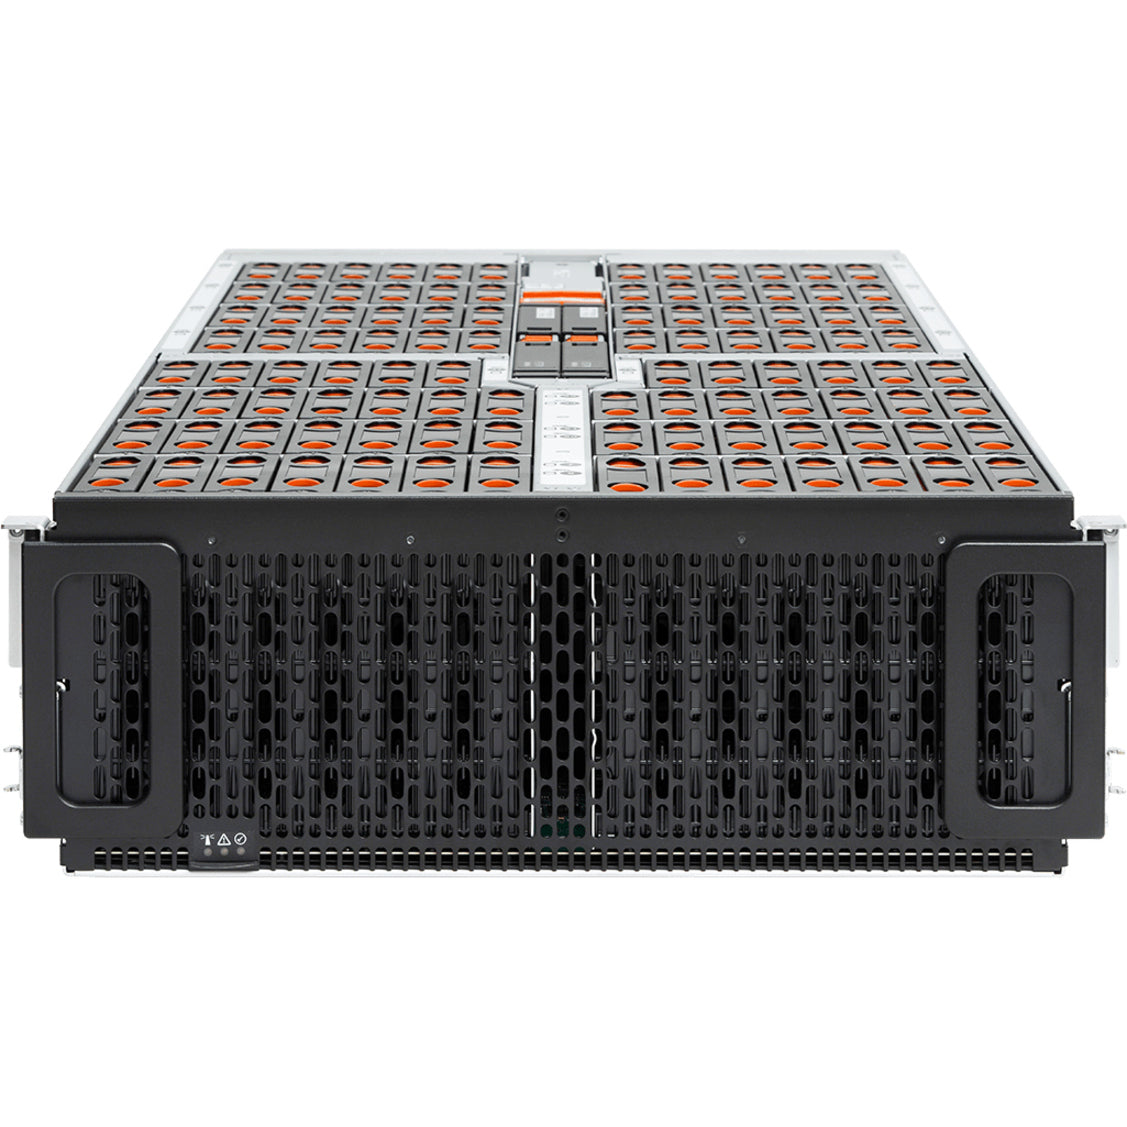 HGST Ultrastar Data102 SE4U60-60 Drive Enclosure - 12Gb/s SAS Host Interface - 4U Rack-mountable